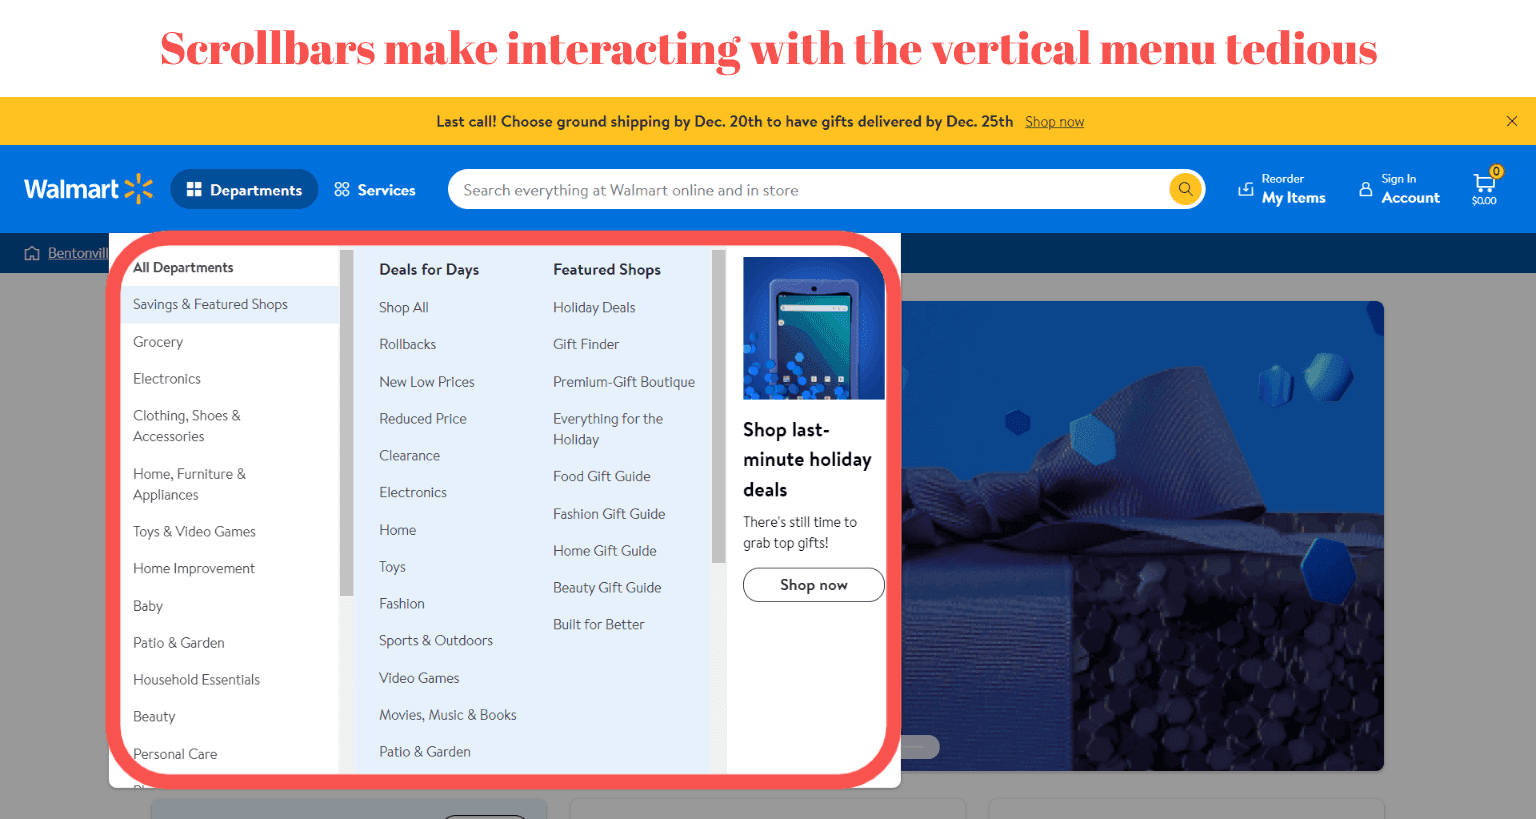 vertical menu shows several nesting tire - Walmart website